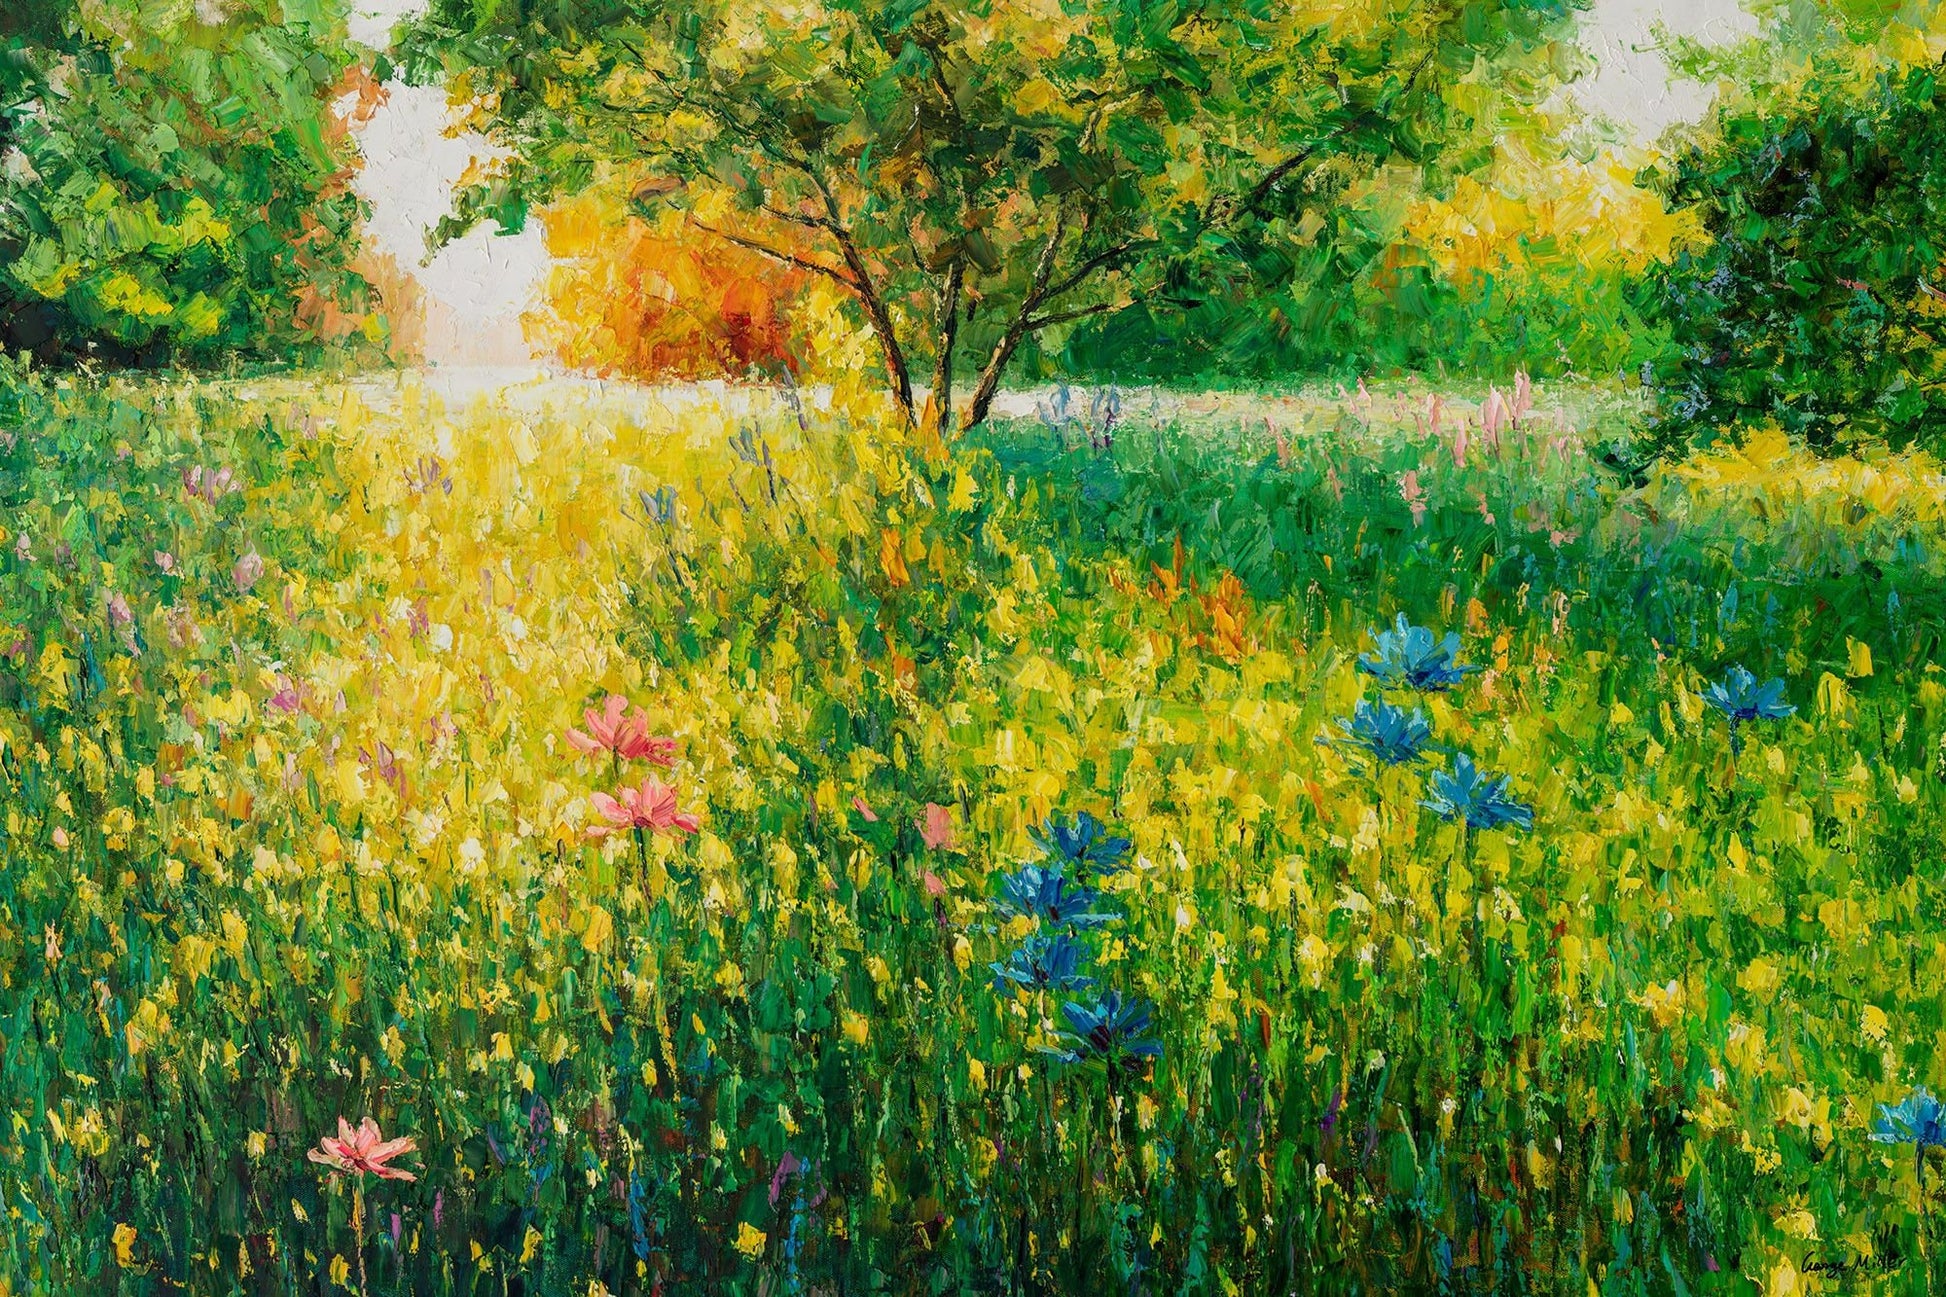 Original Landscape Oil Painting, "Emerald Meadow", Large Textured Impasto Art - GeorgeMillerArt